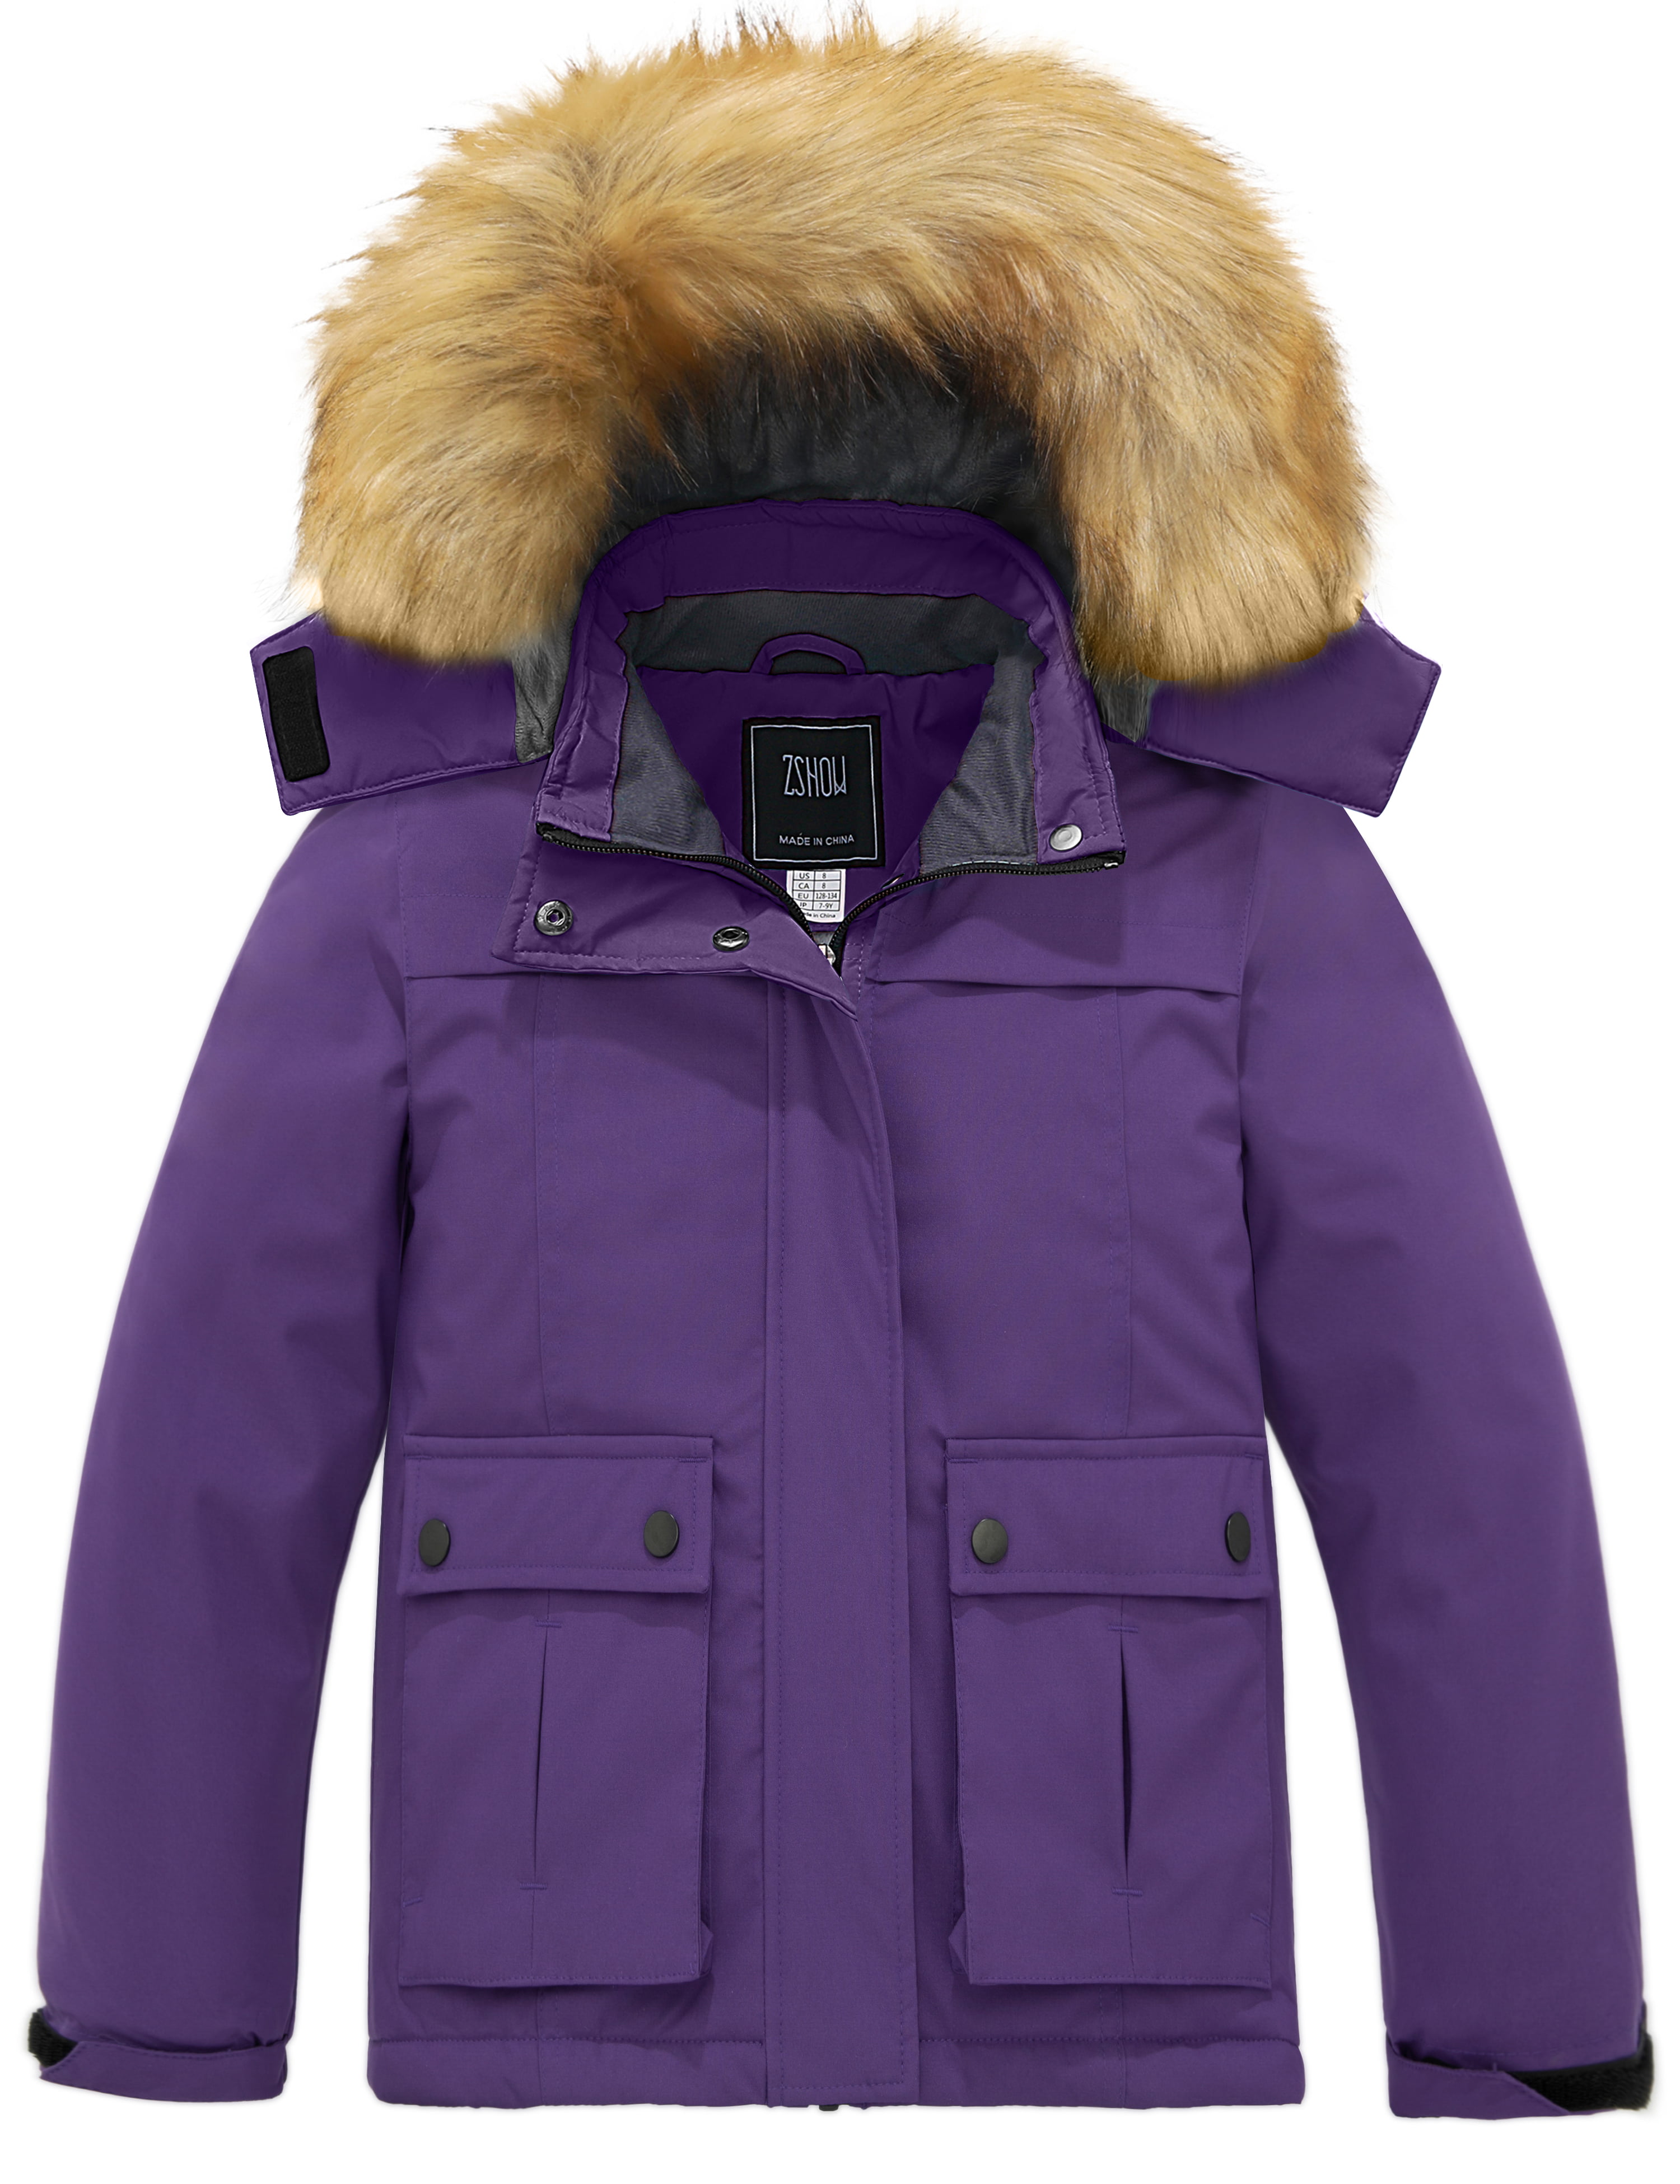 ZSHOW Girls' Waterproof Ski Jacket Warm Fleece Lined Thick Padded Winter Coat 